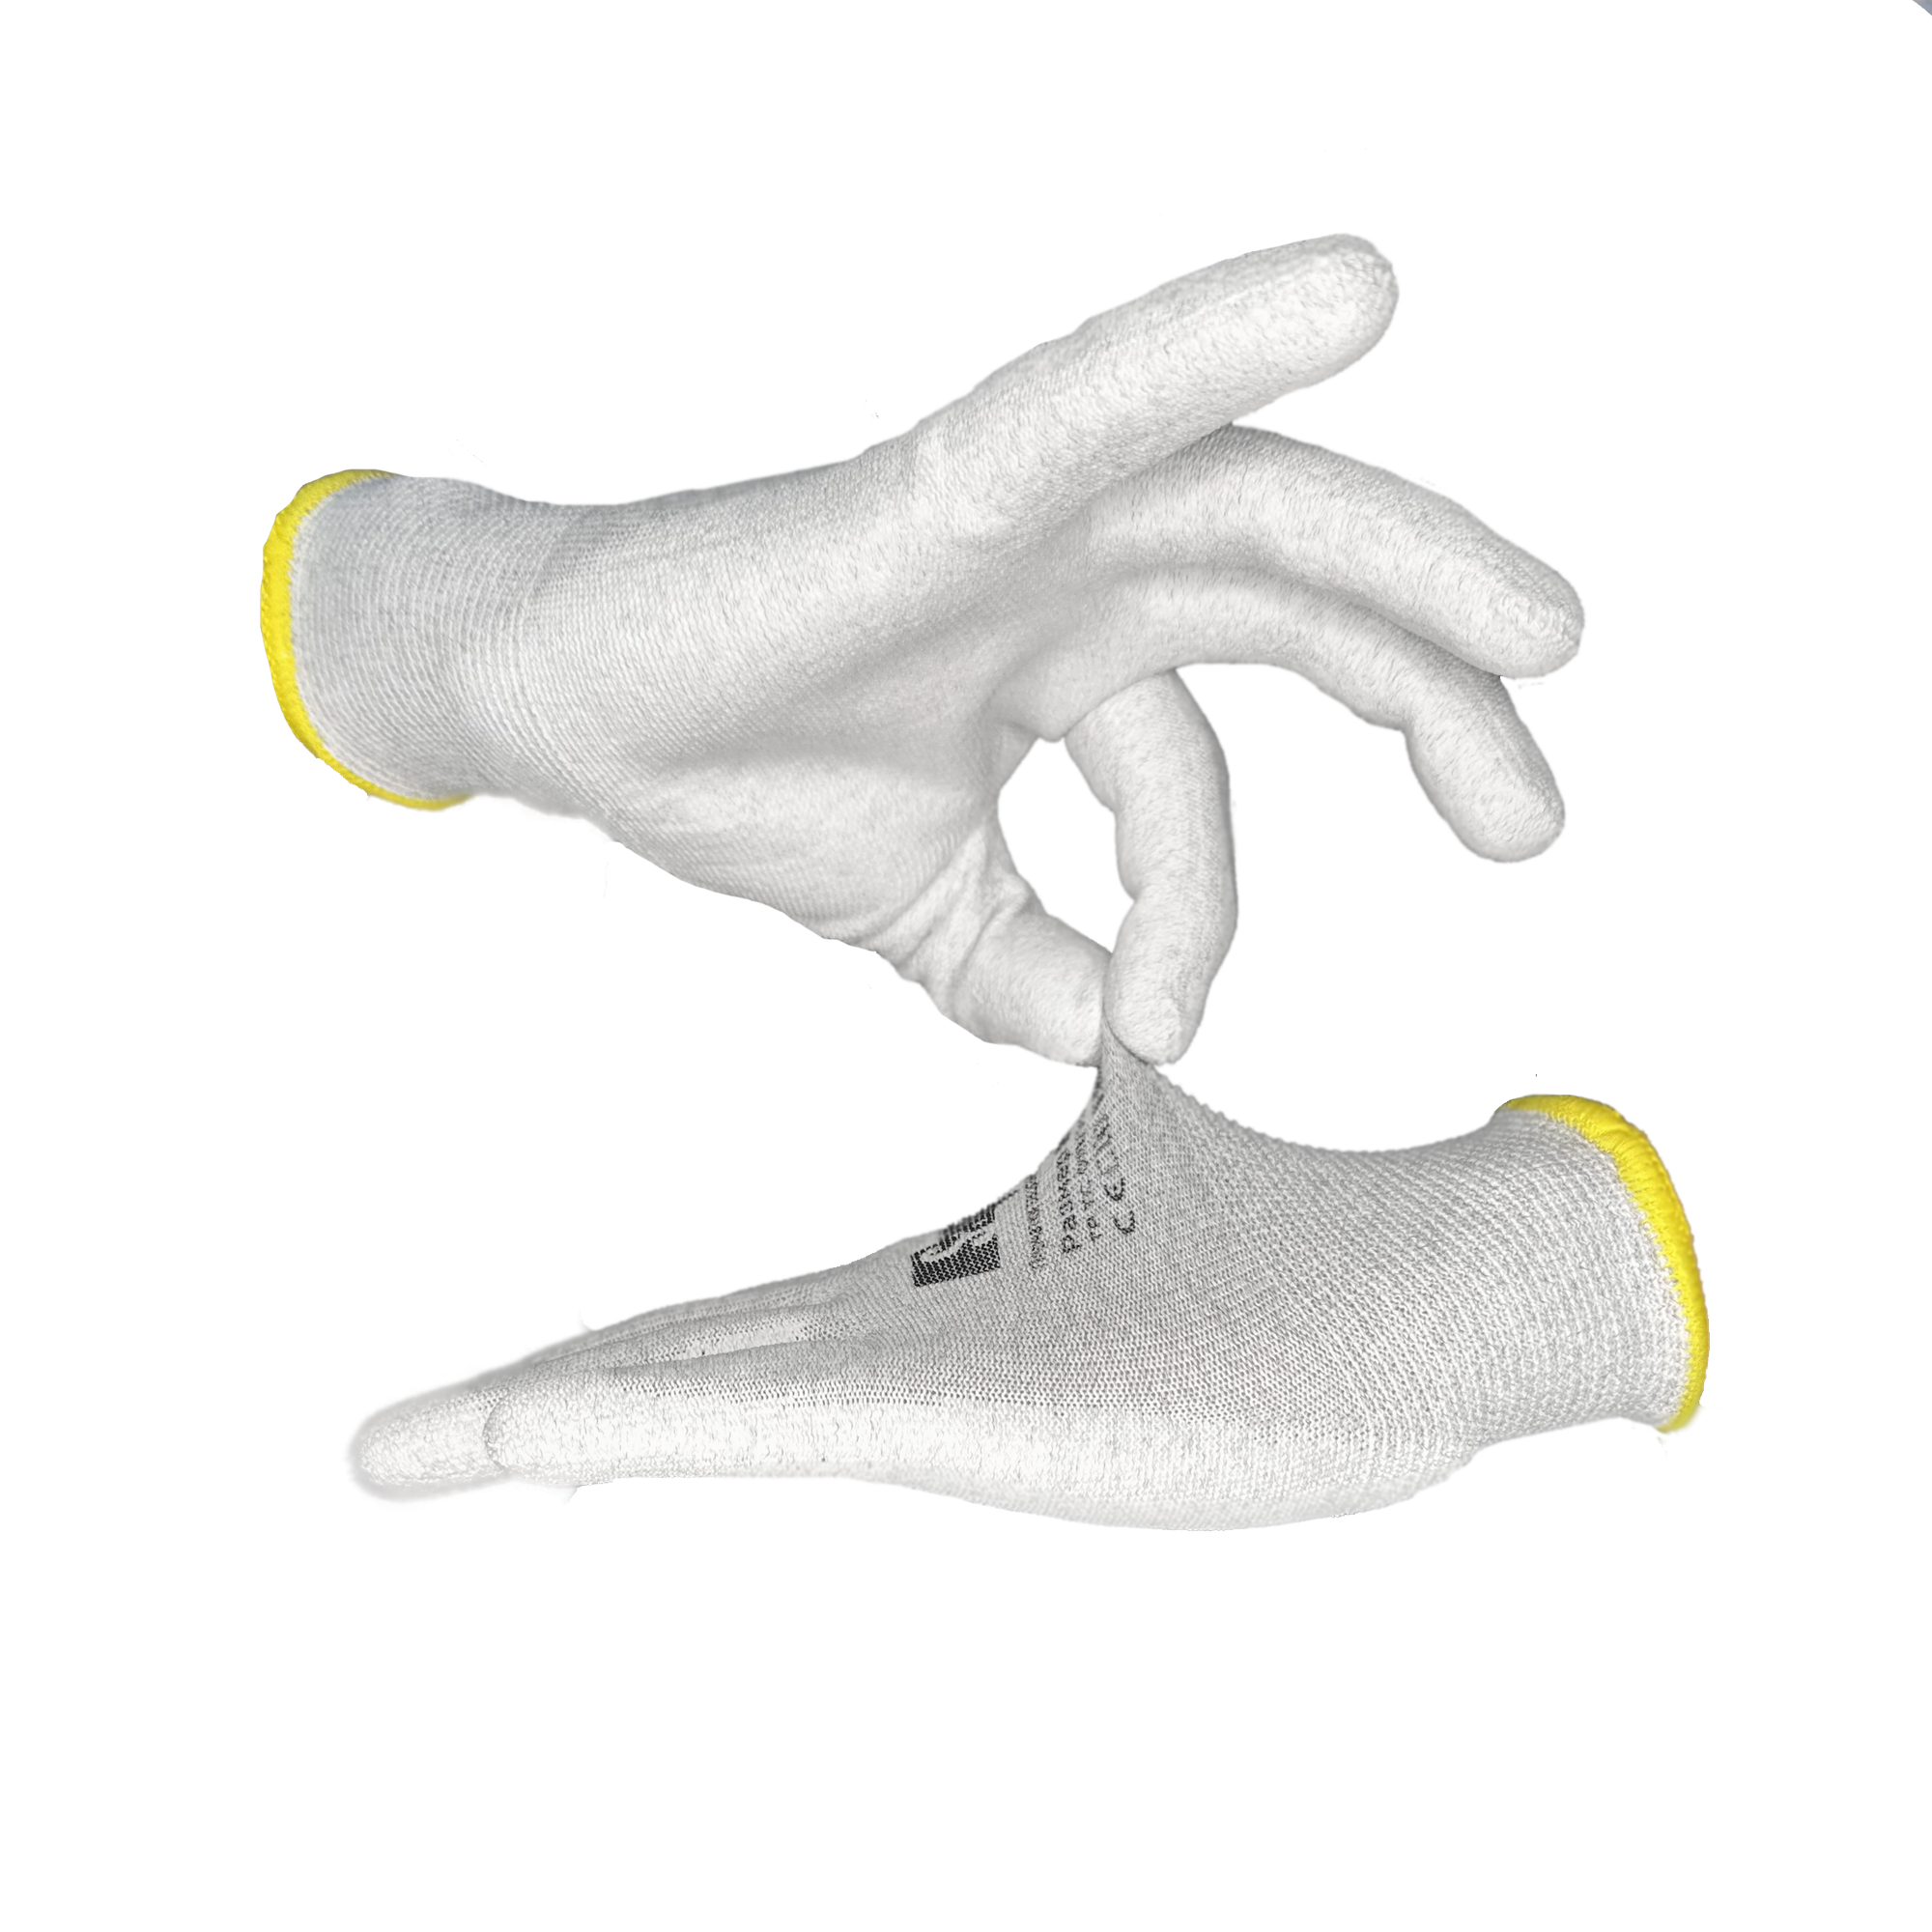 Перчатки рабочие с покрытием из полиуретана Sapset Avior White ESD антистатические размер L/9 - 5 пар